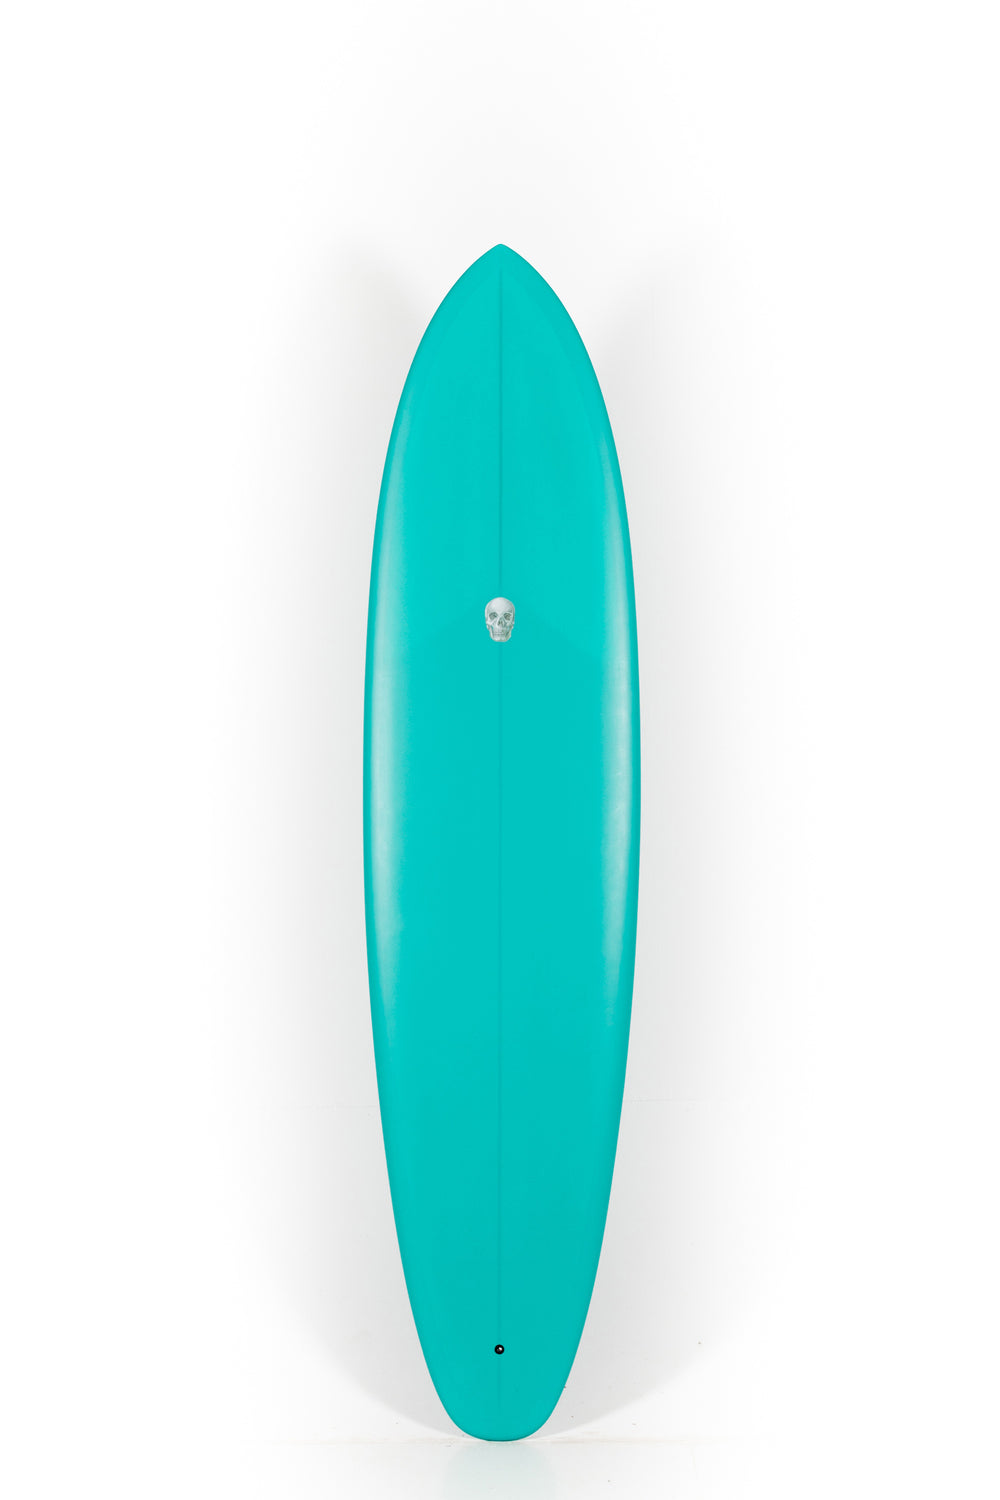 Pukas Surf Shop - Christenson Surfboards - FLAT TRACKER 2.0 - 7'6